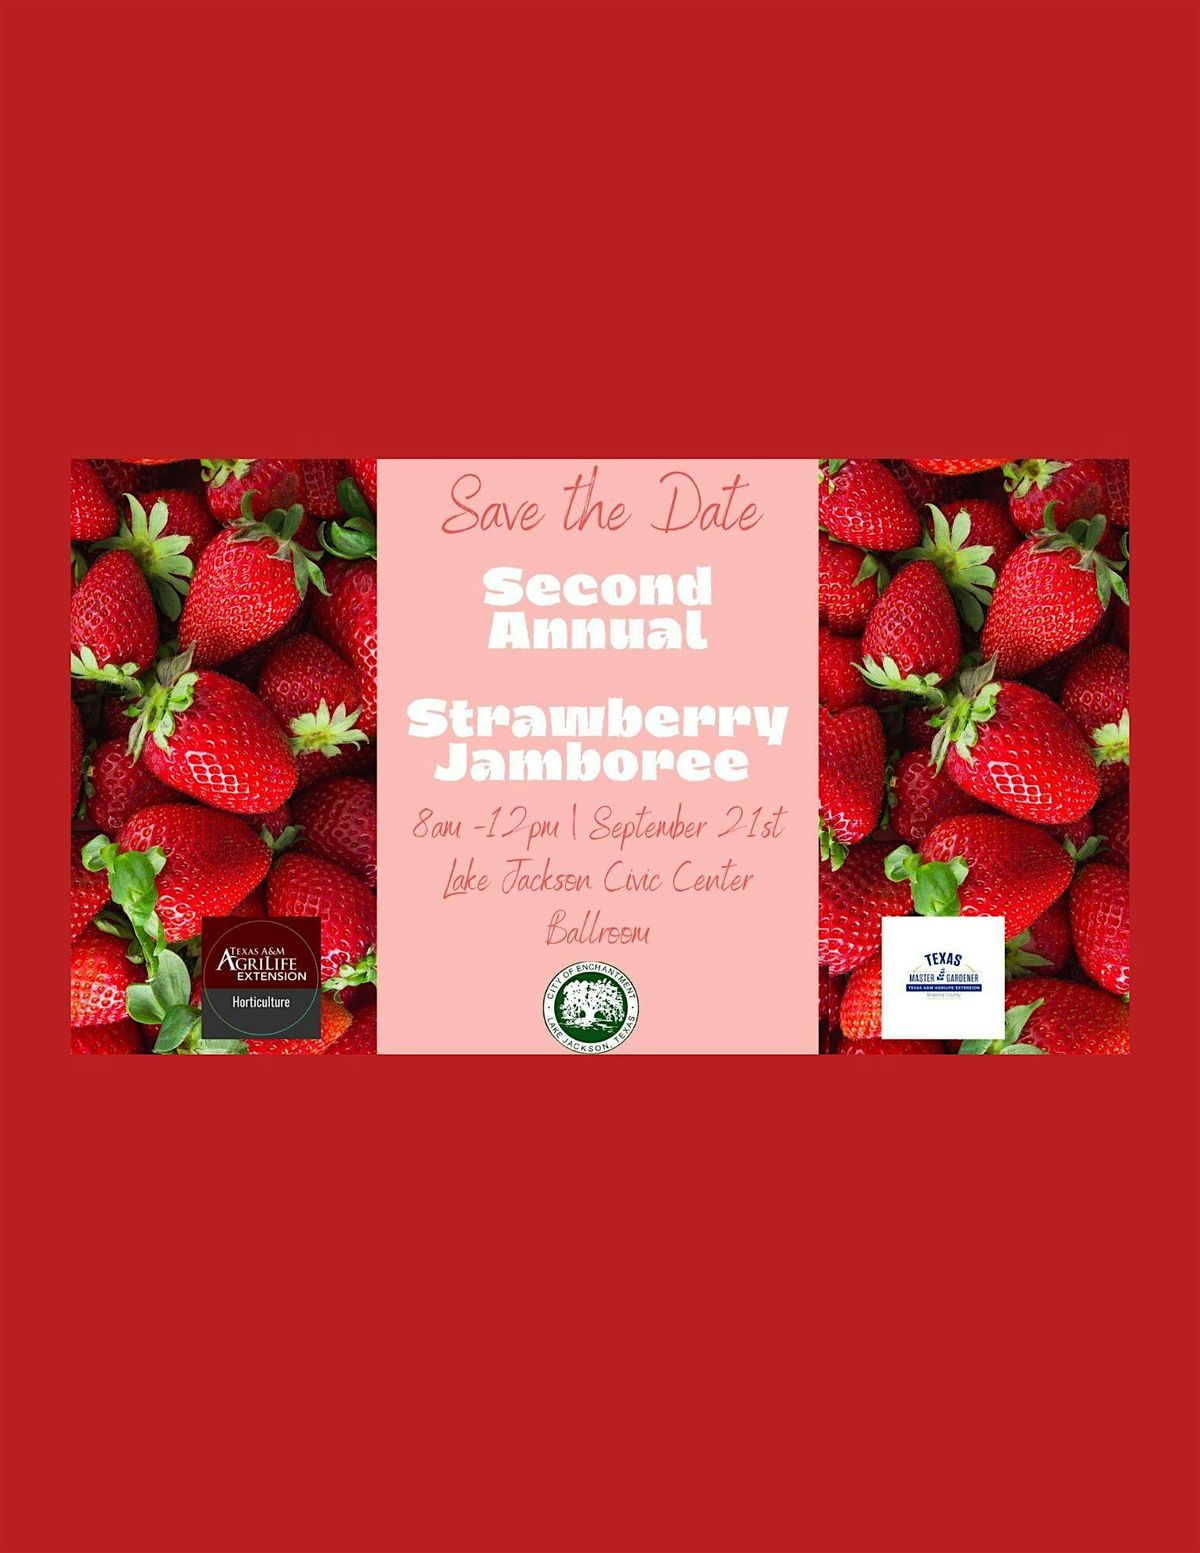 Second Annual Strawberry Jamboree